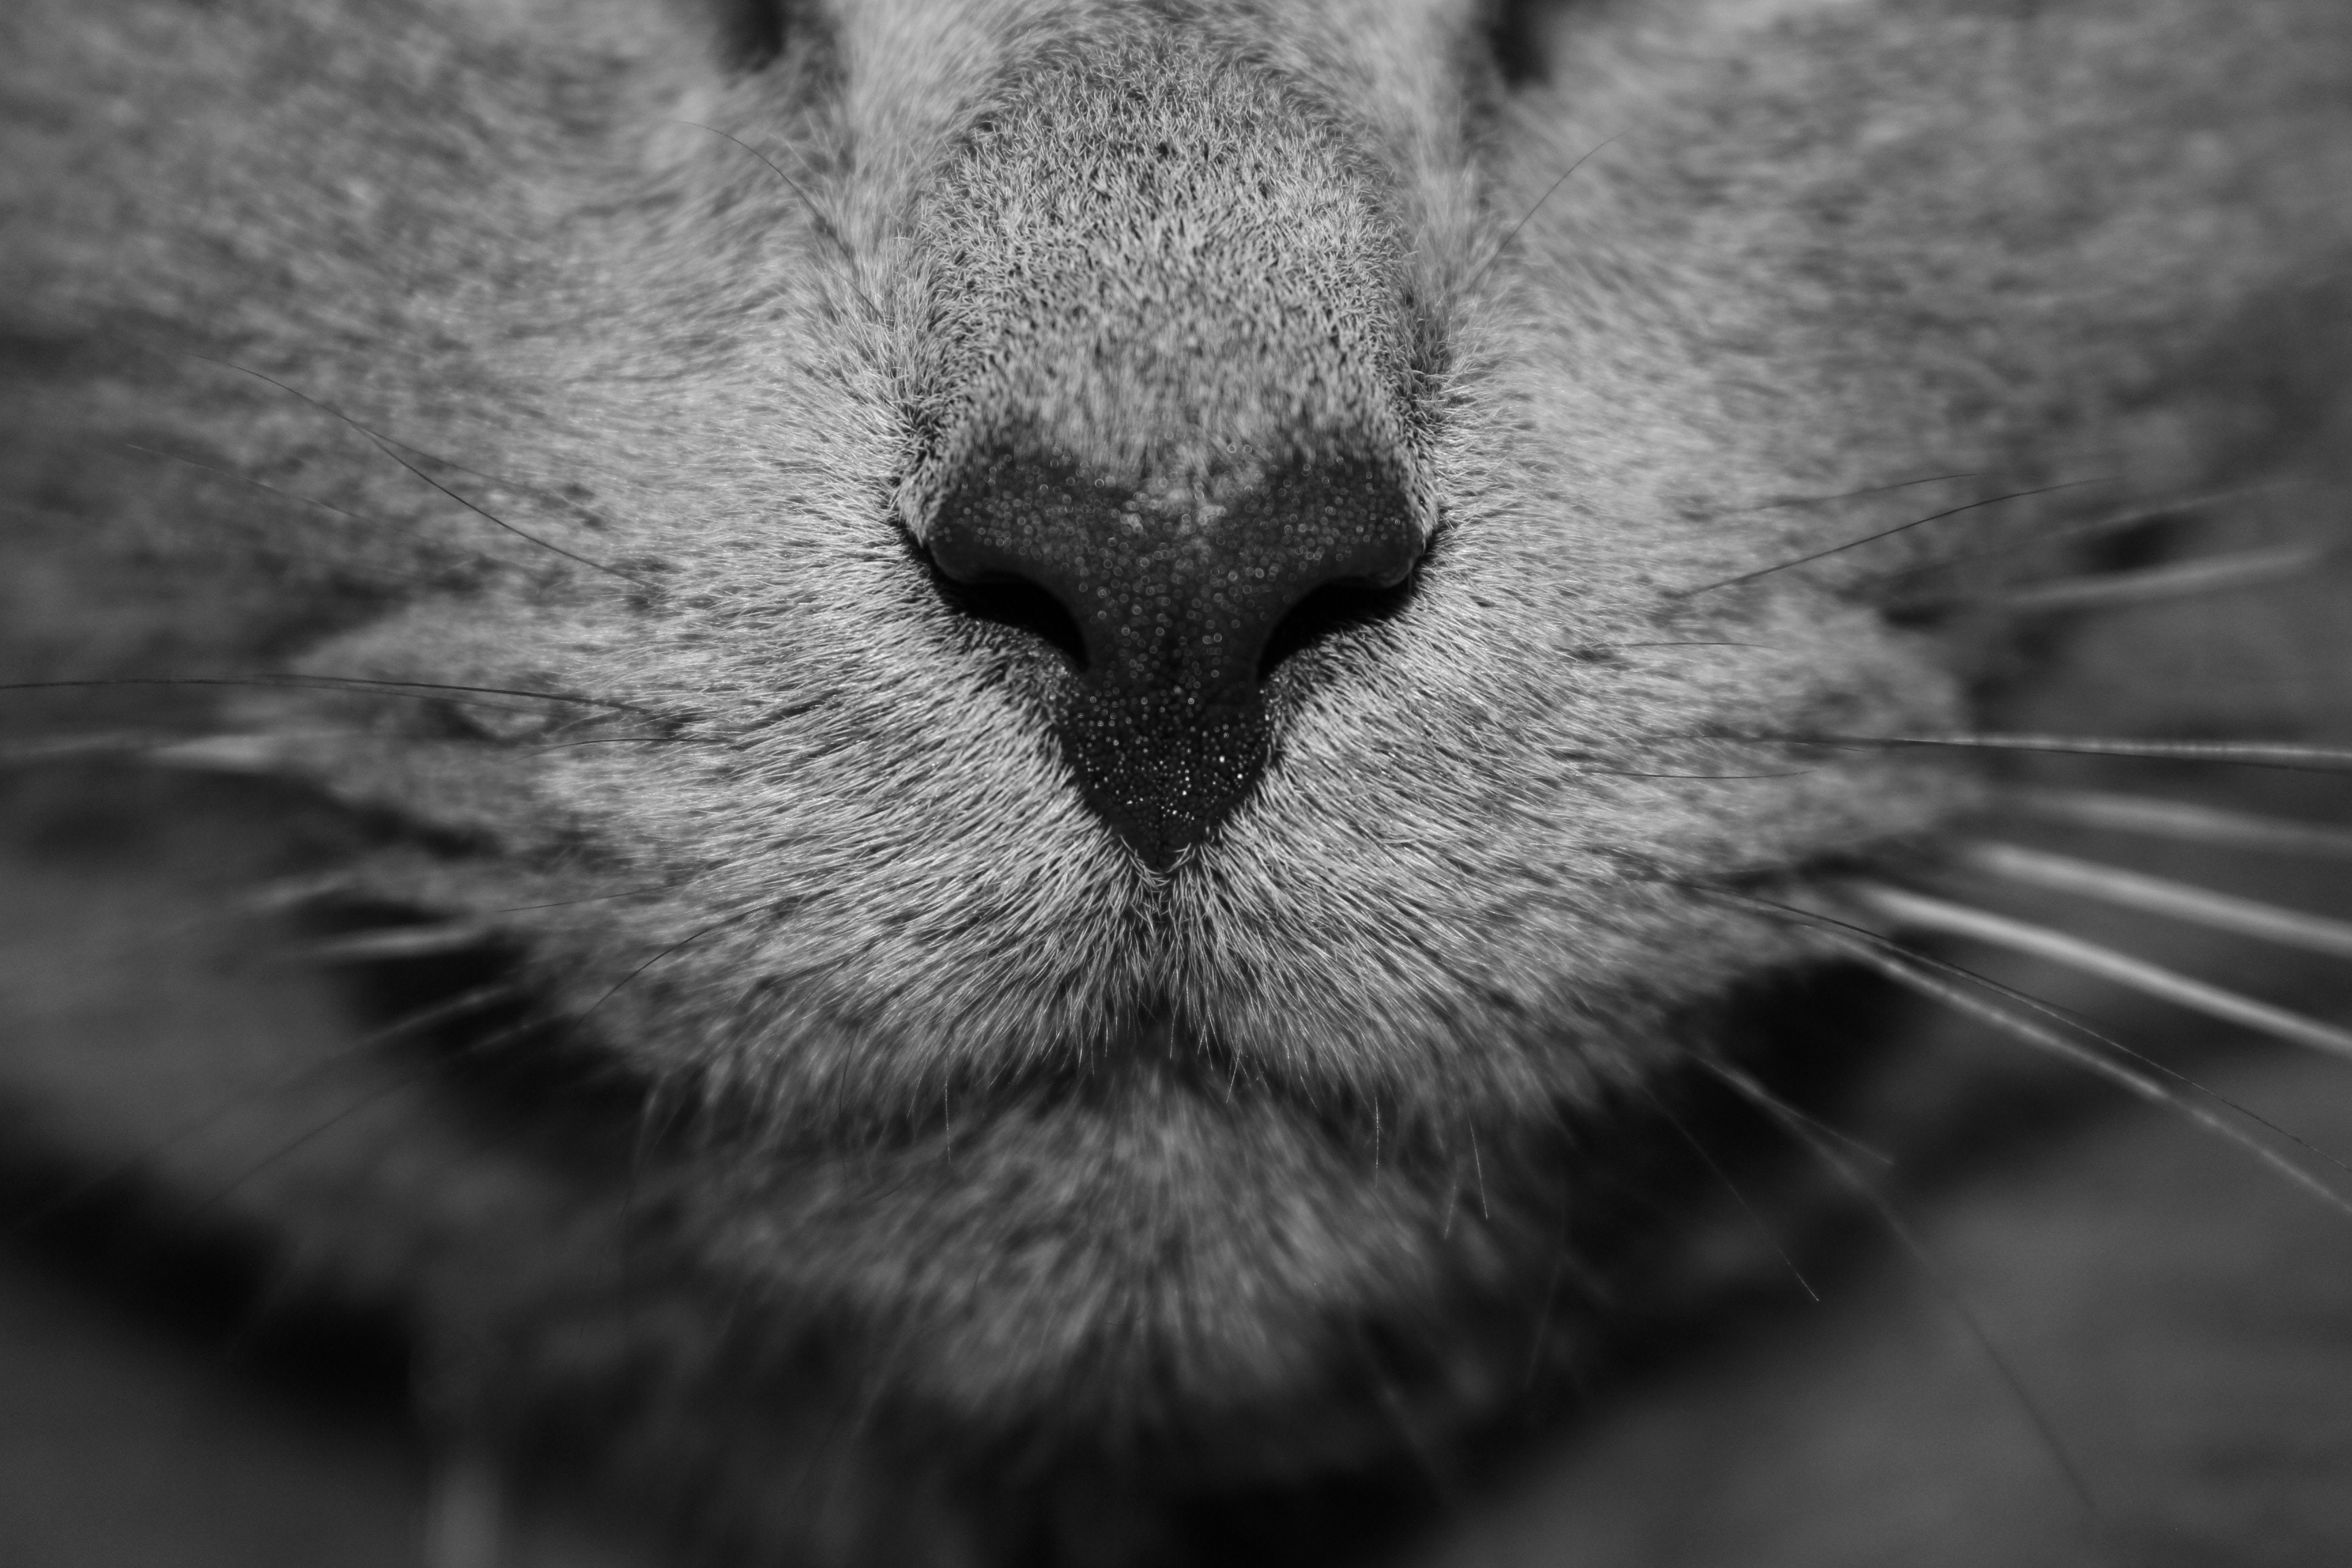 Cat nose, showing pixel targeting for dealership agencies